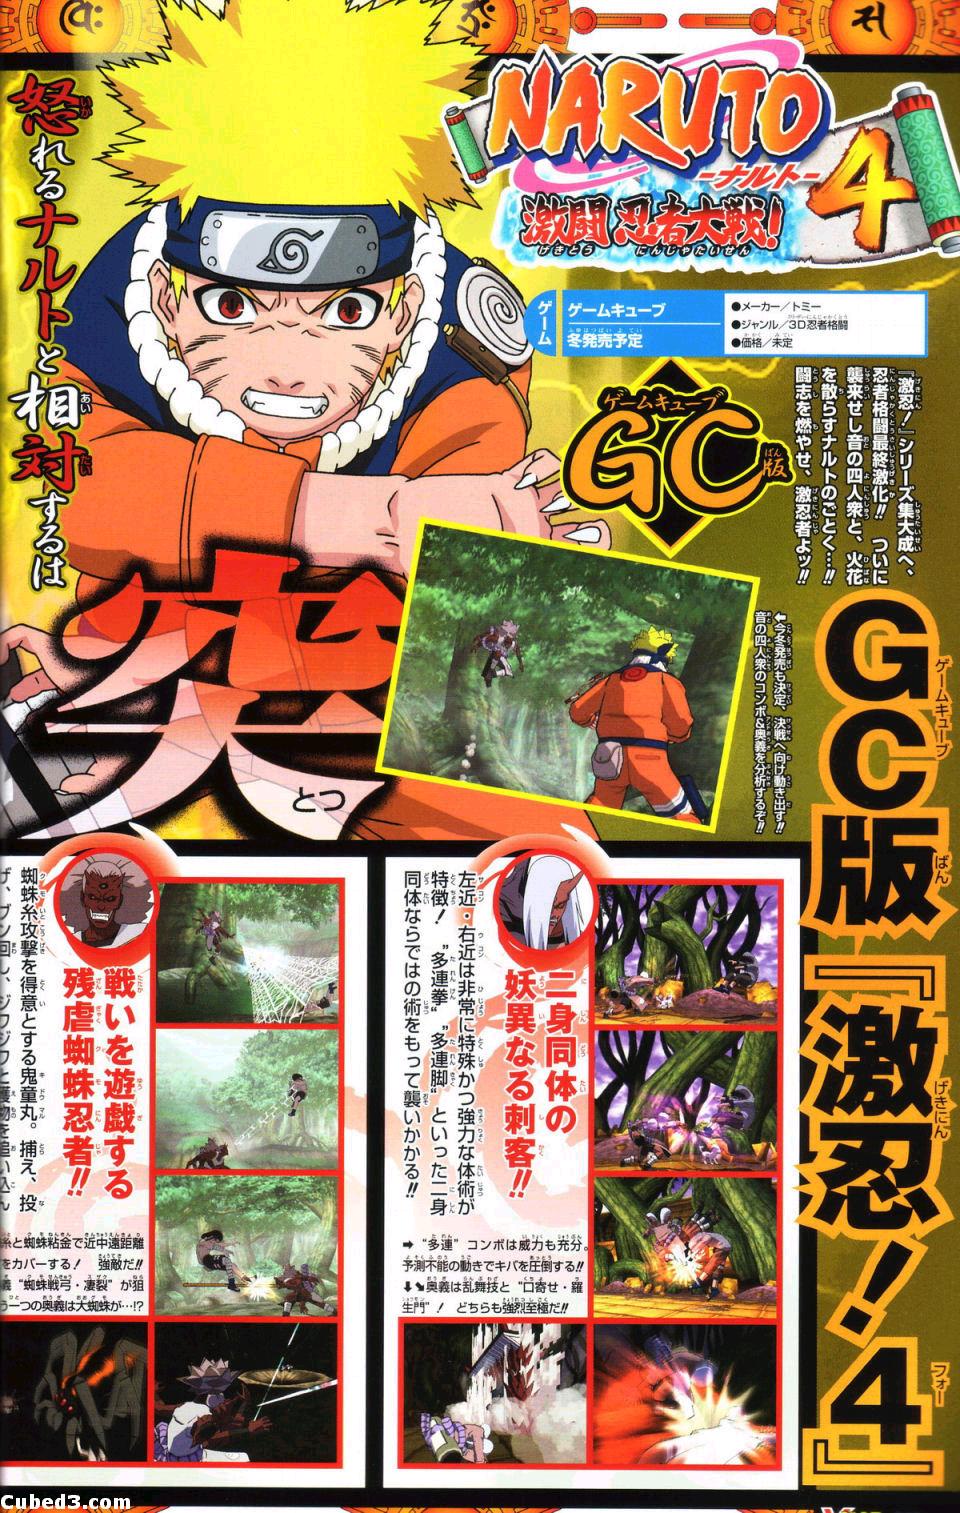  Hacks - Naruto: Gekitou Ninja Taisen! 4